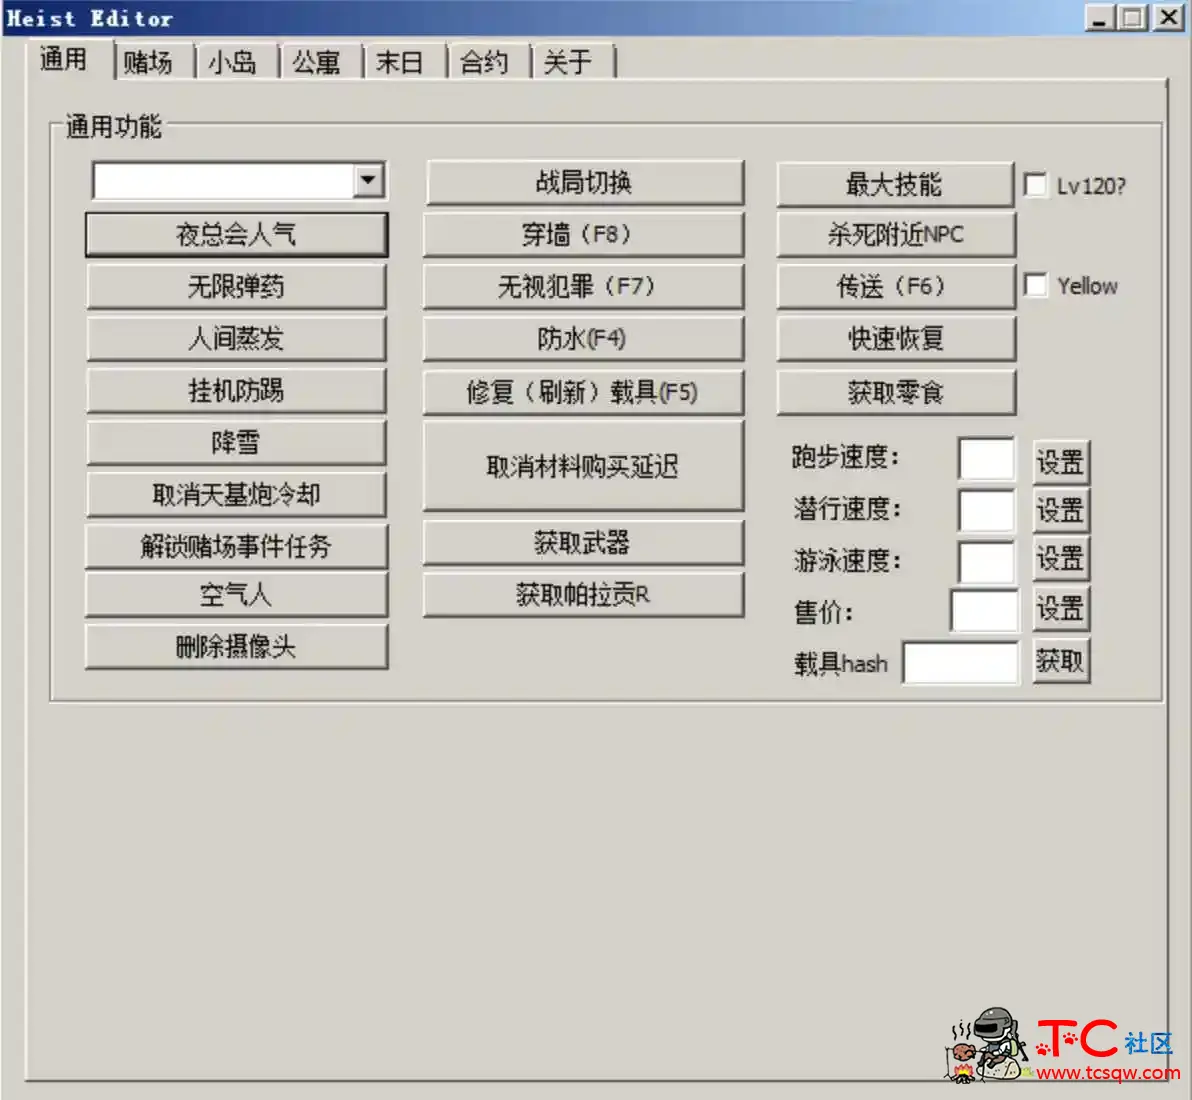 GTA5 Heist Editor外部抢劫编辑器 v3.5.7 屠城辅助网www.tcfz1.com3019